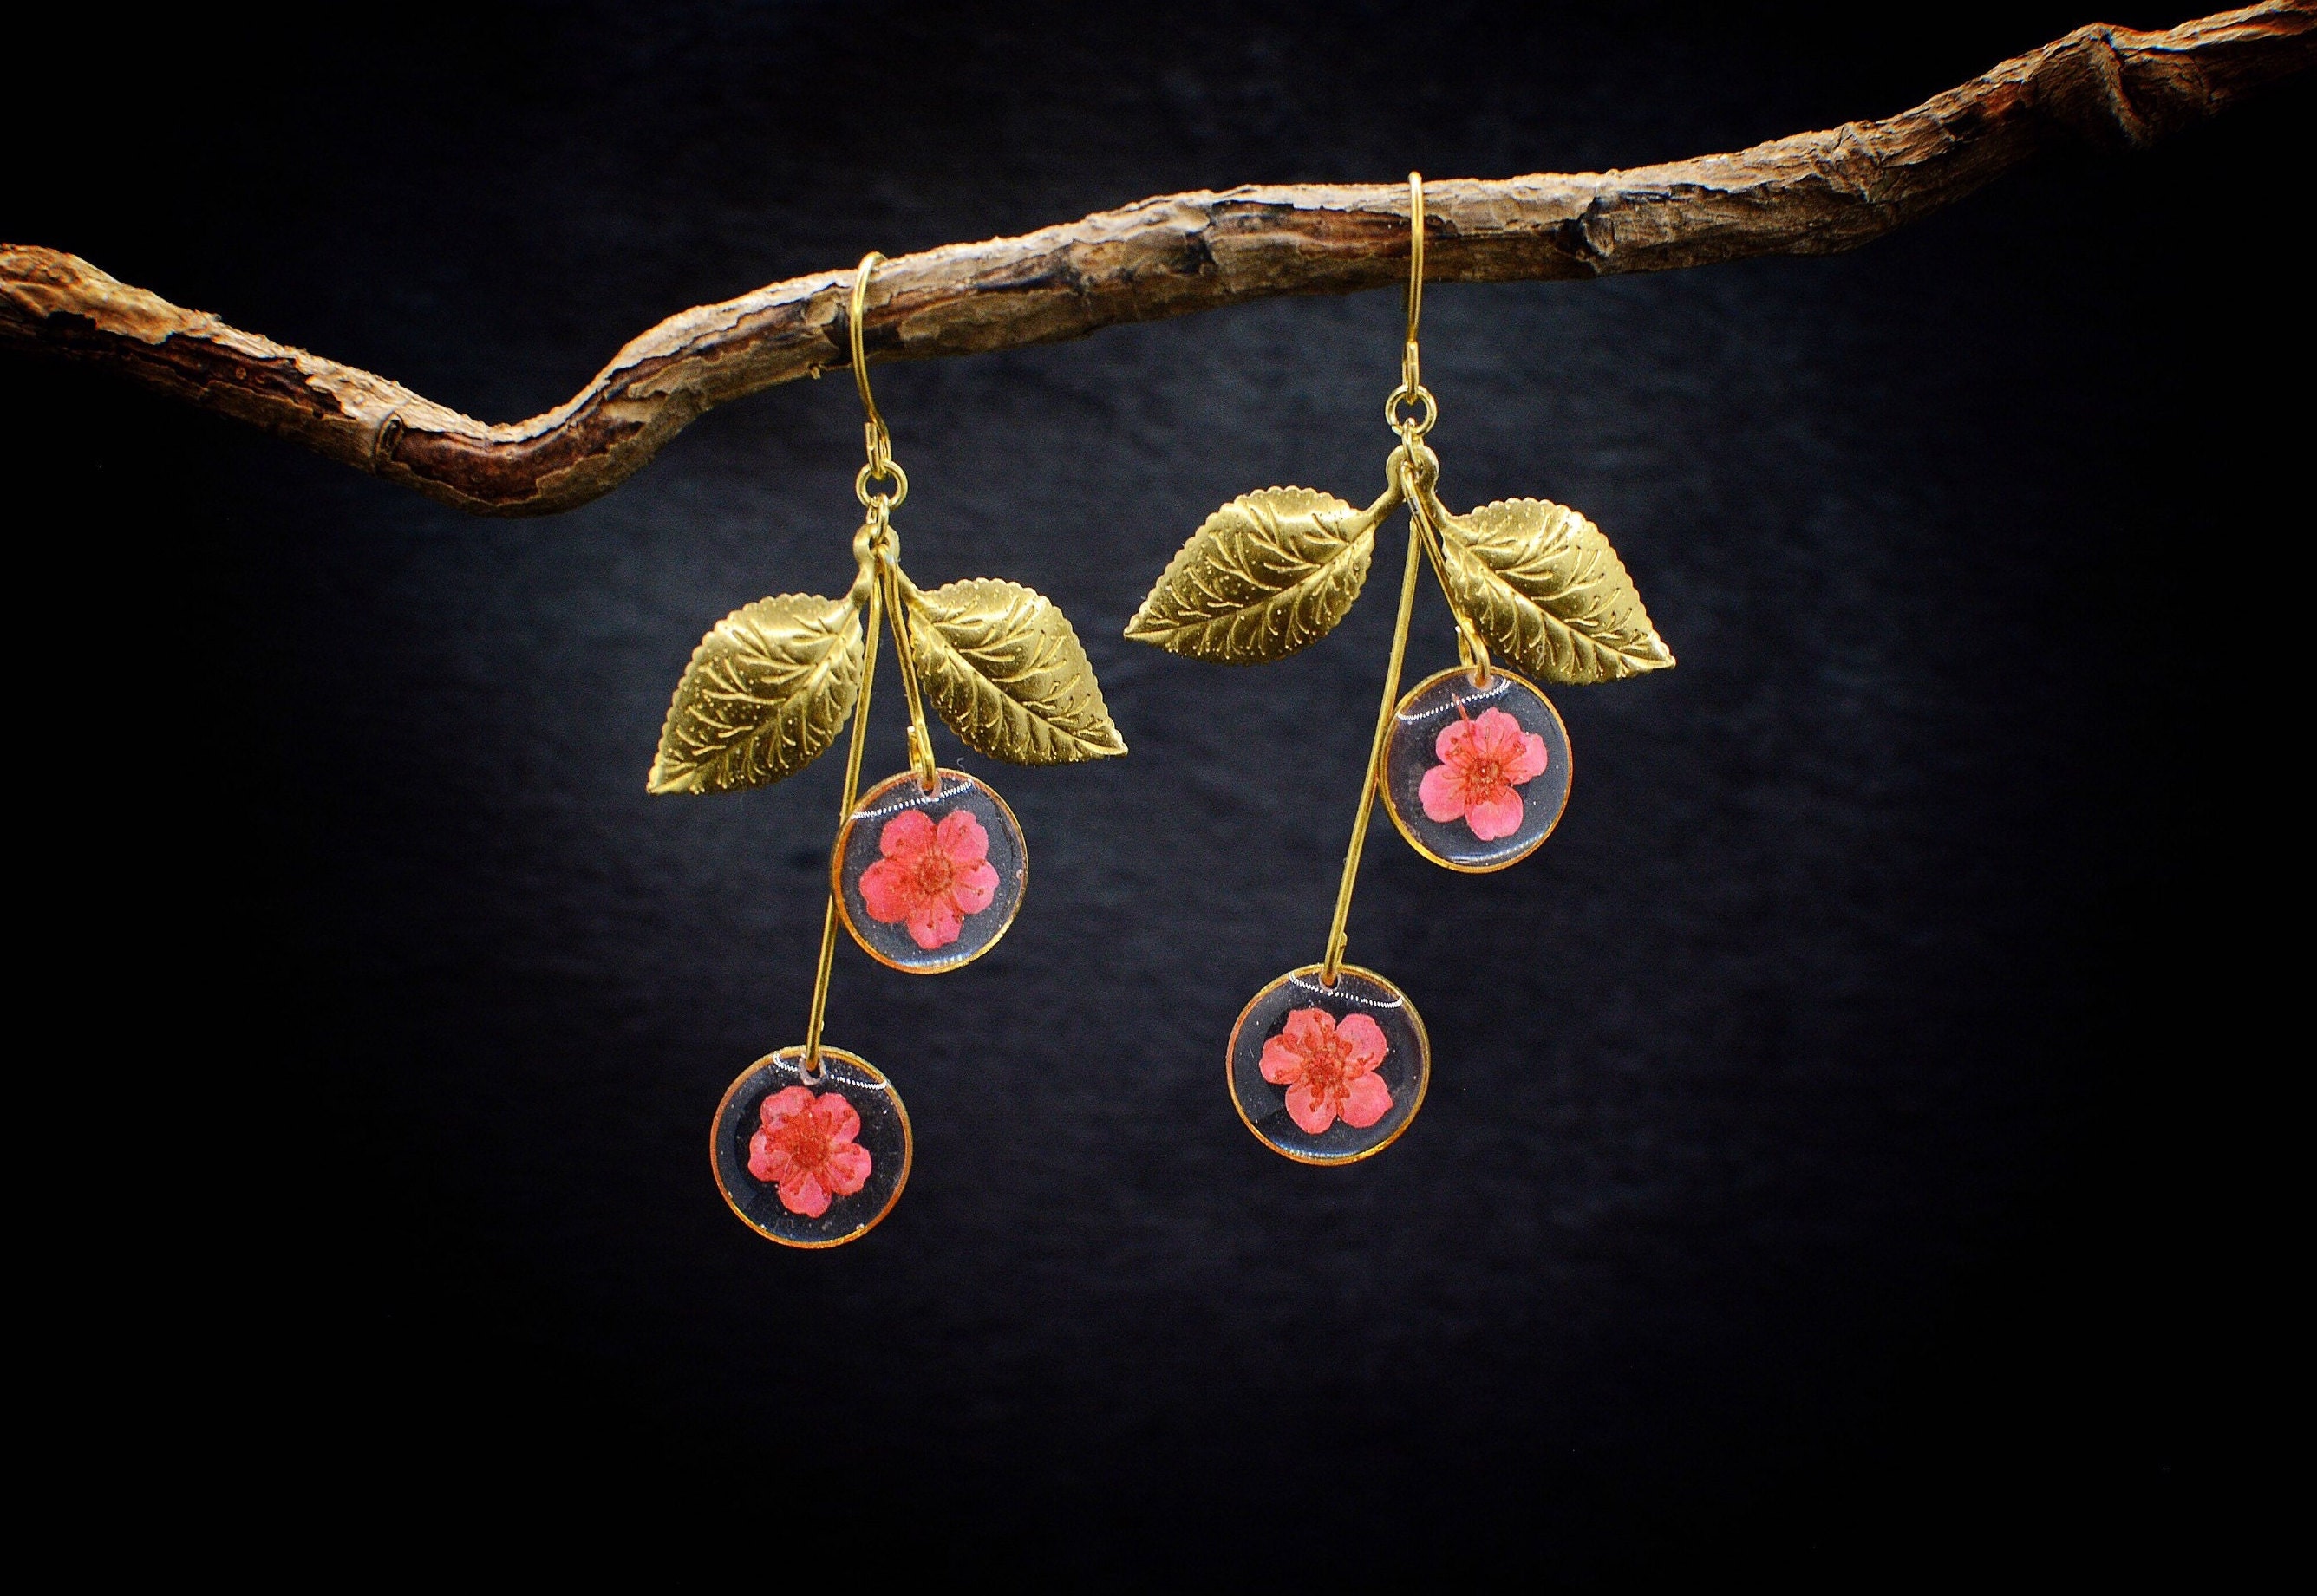 Cherry Drops/Pressed Flower Earrings/Dangle Drop Earrings/Gift For Her/Real Jewelry/Botanical Handmade Earrings/